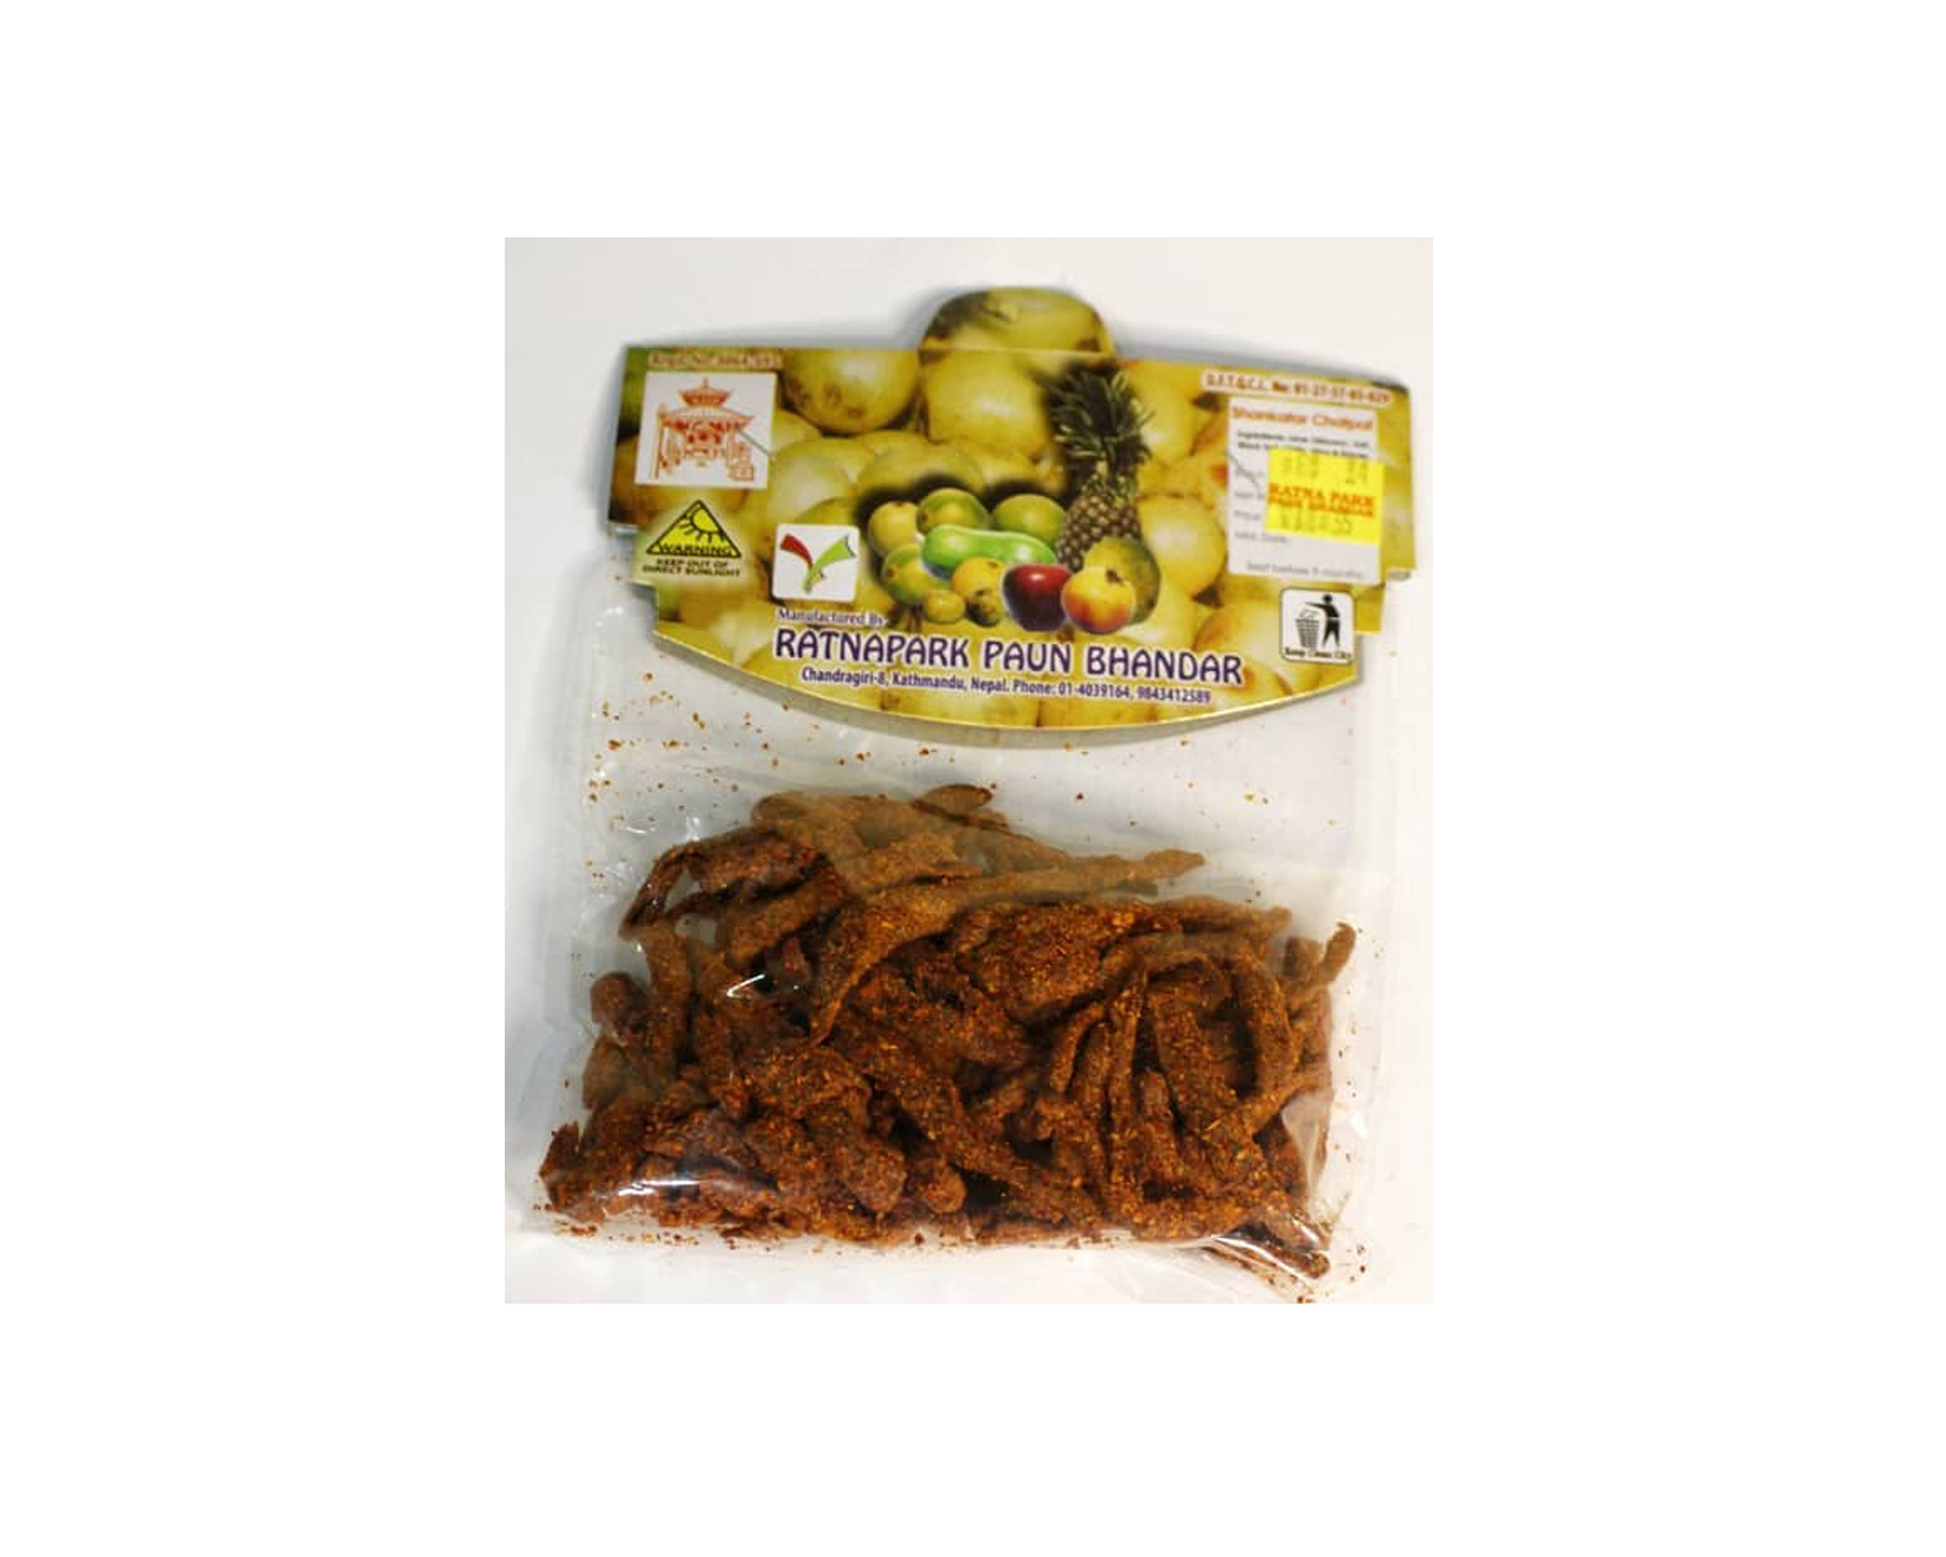 Ratnapark Paun - Indian Spices